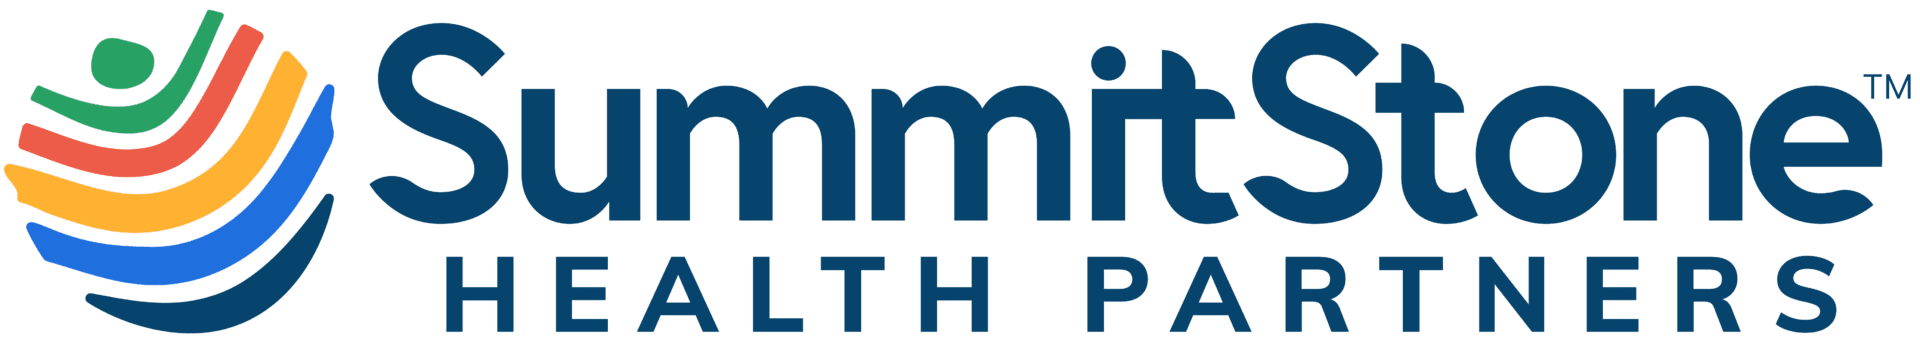 SummitStone Health Partners logo